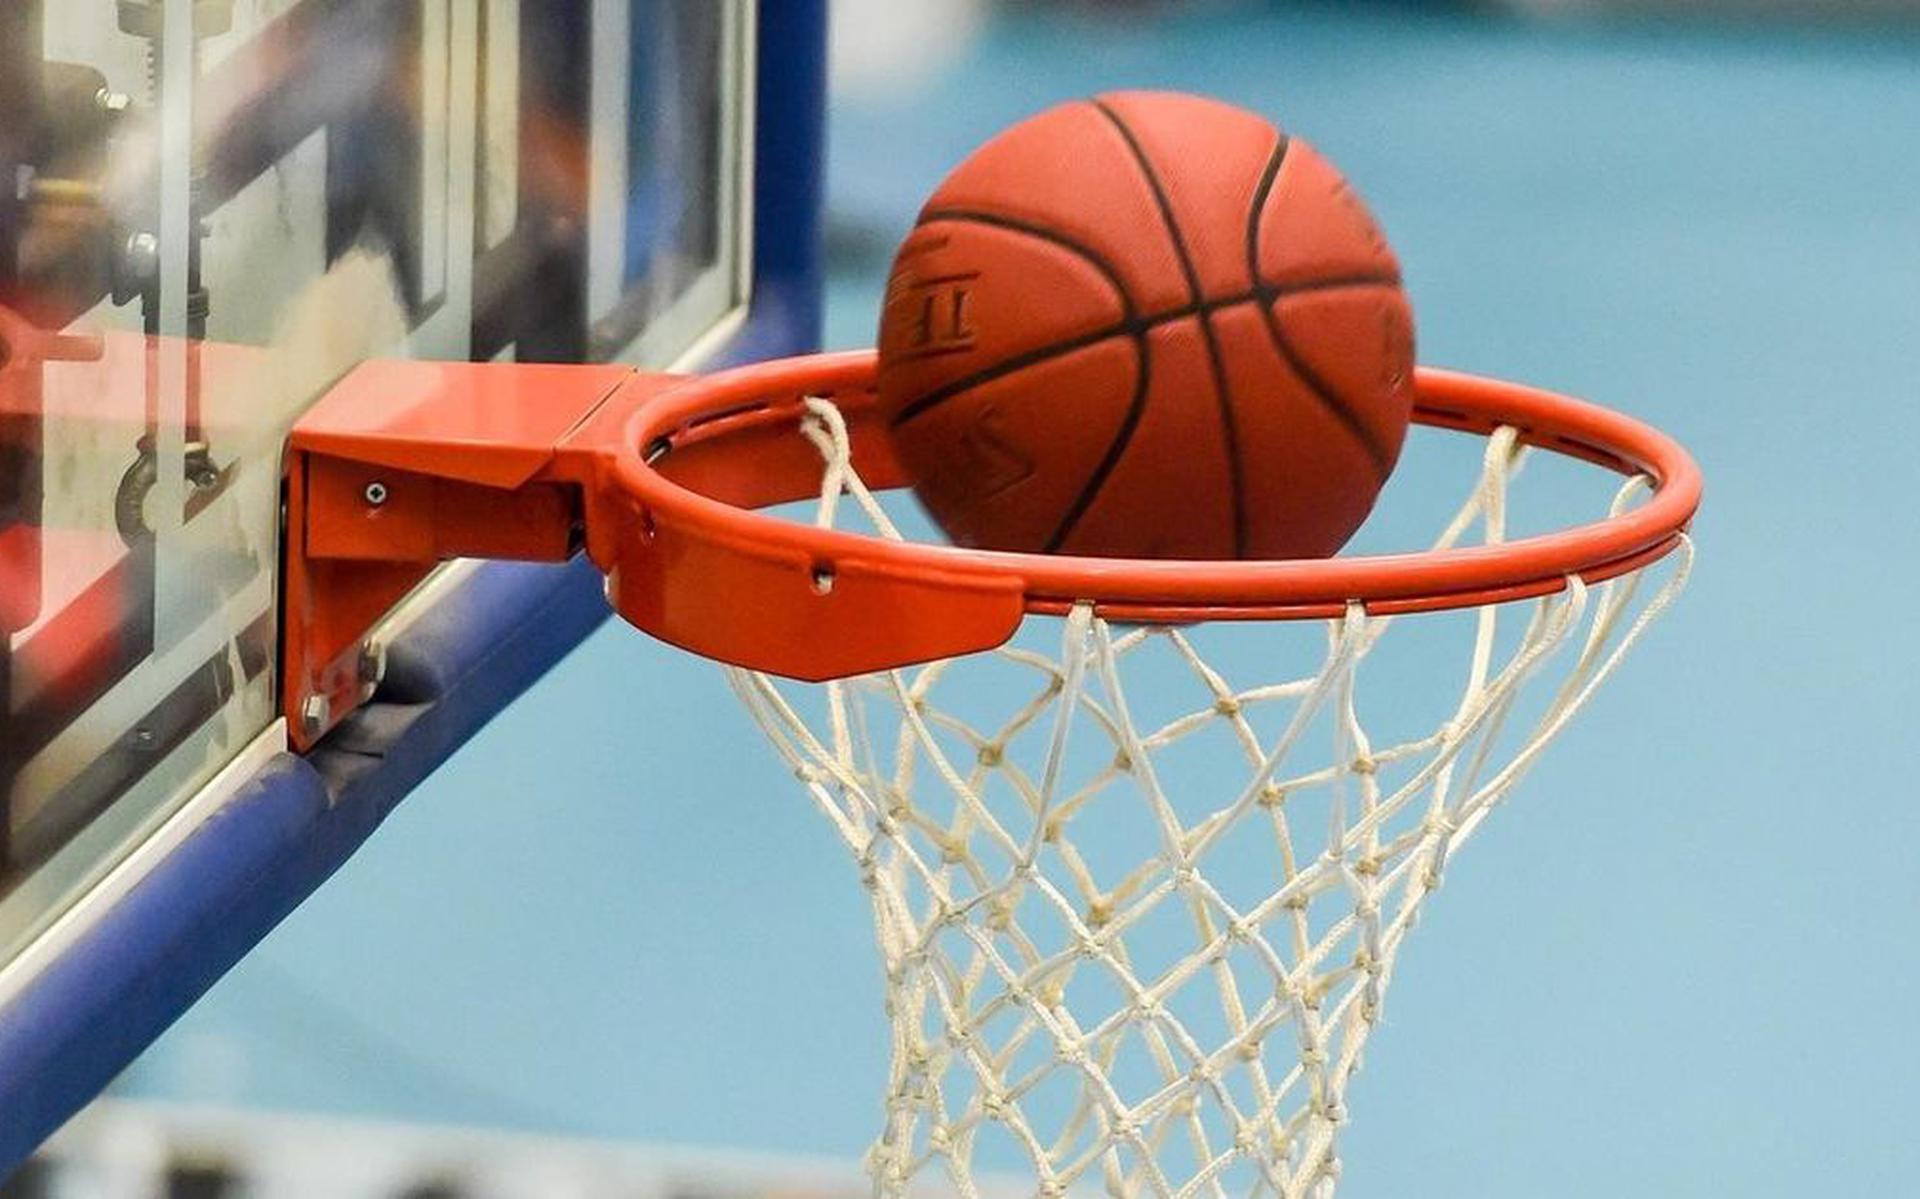 Ithaca ga verder Herdenkings DIO Basketball hangt weer aan de basketringen - Nieuwe Ooststellingwerver